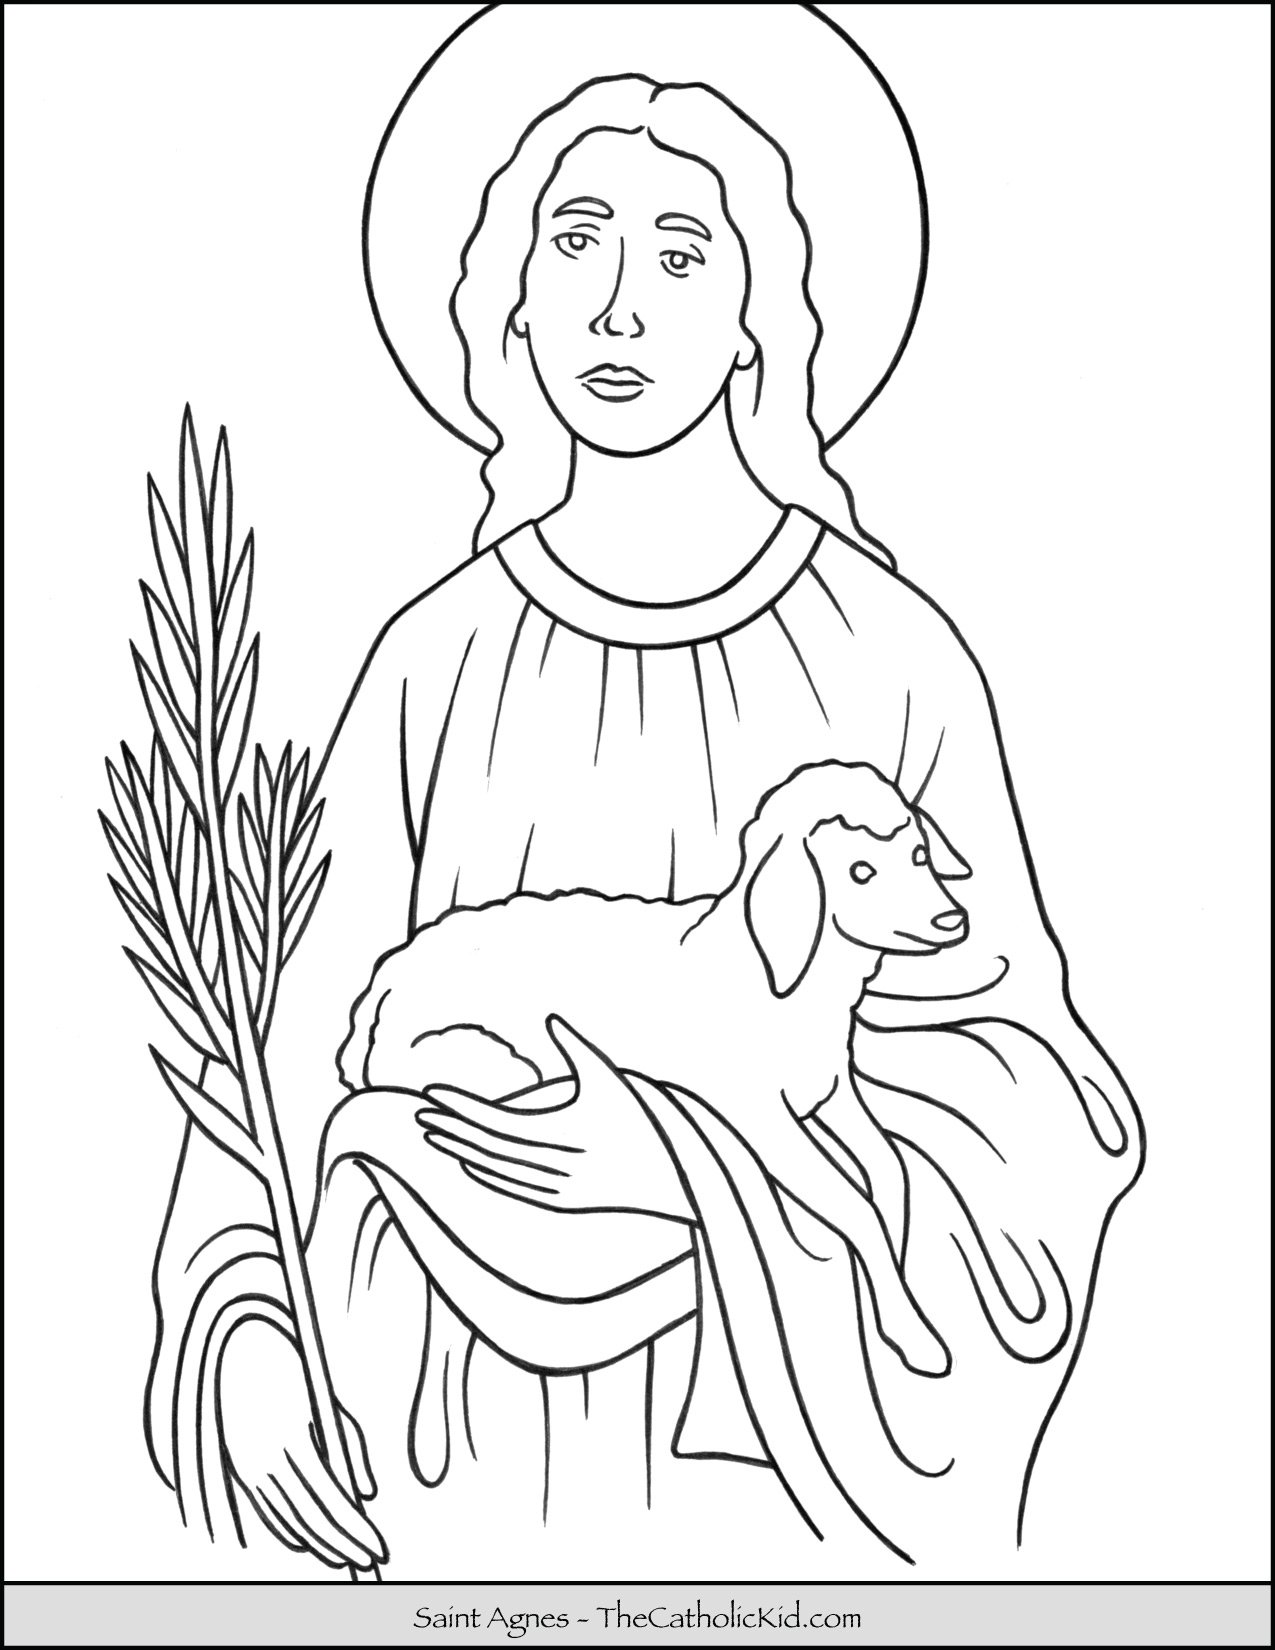 Saint Agnes Coloring Page - TheCatholicKid.com